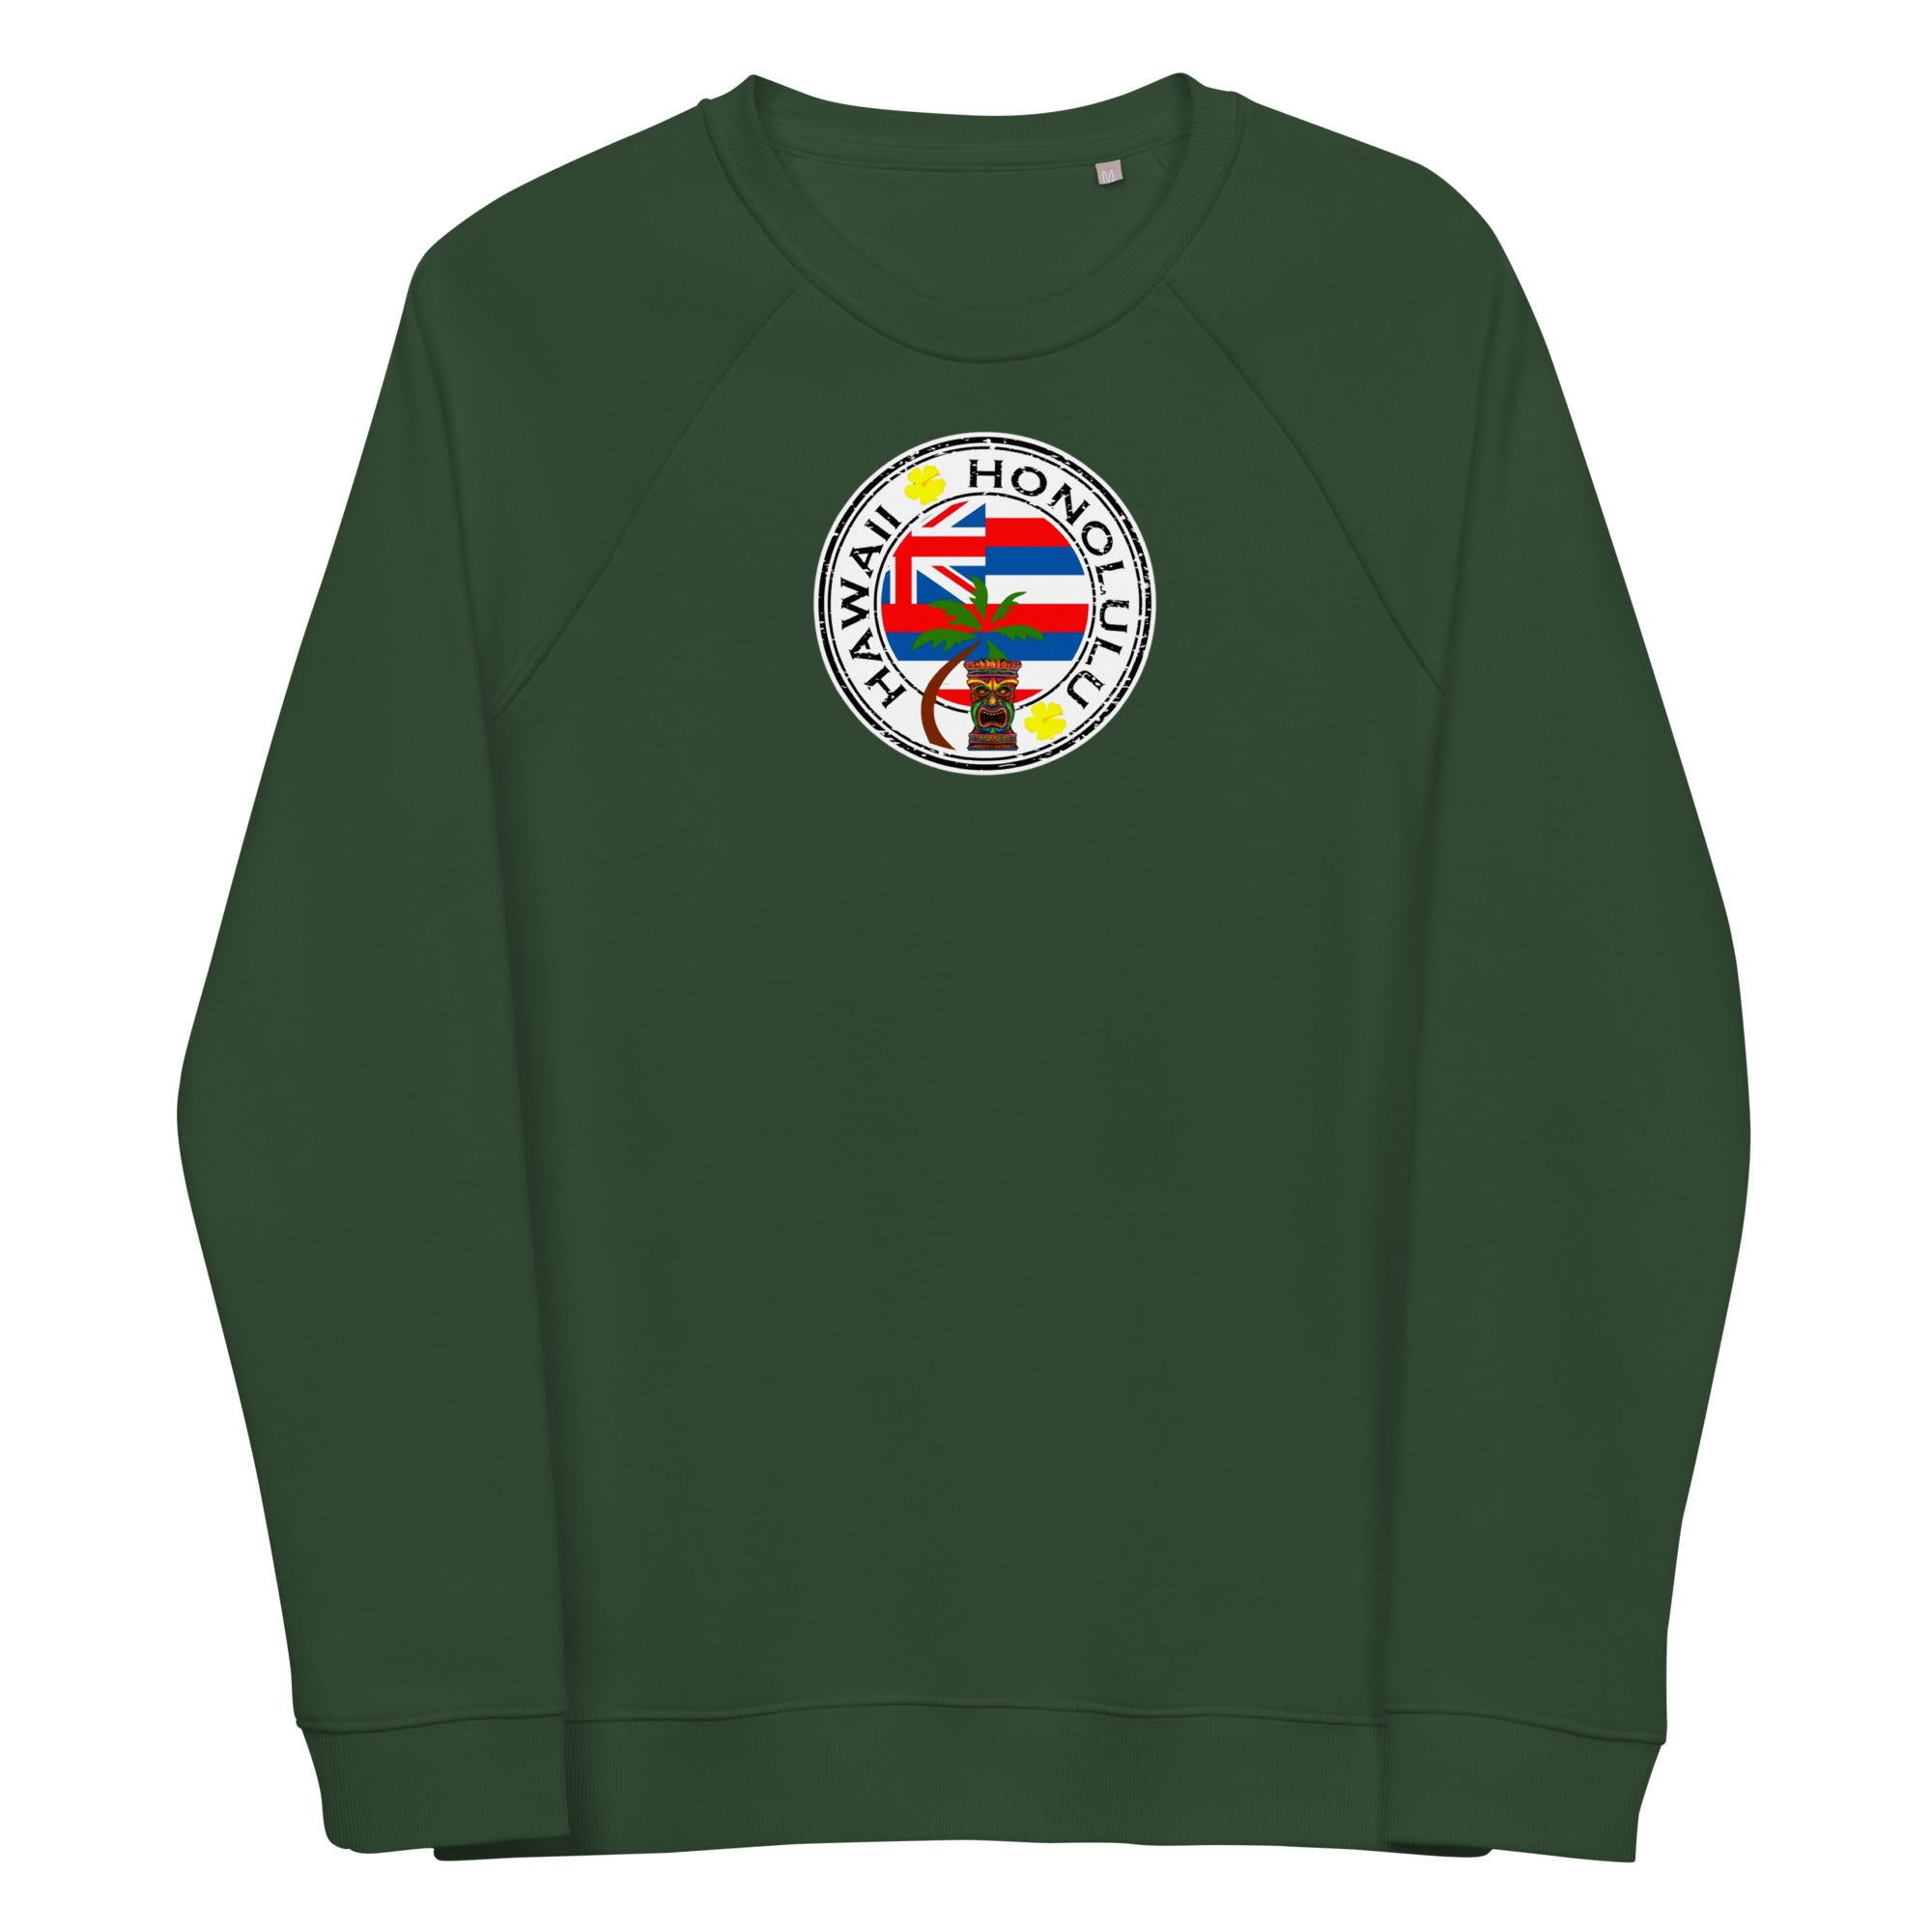 Unisex Organic Raglan Sweatshirt - Honolulu Hawaii Vintage - GRAPHIC T-SHIRTS